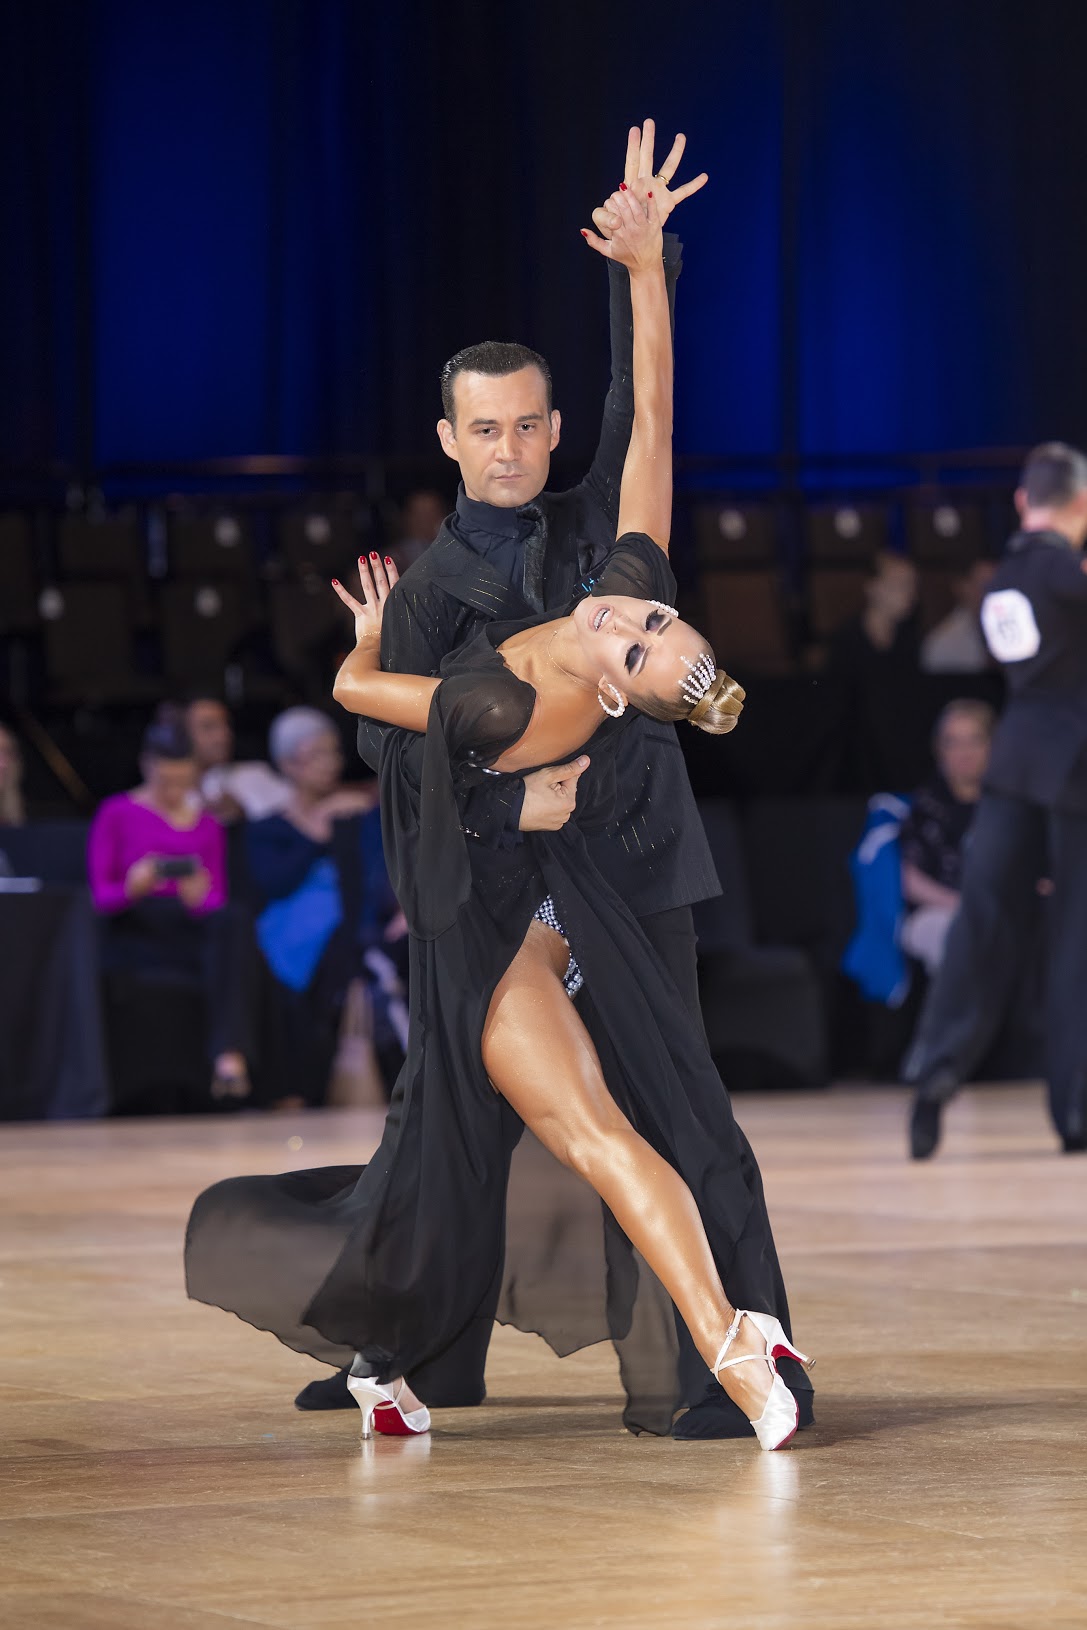 salsa dance poses - Google Search | Dance poses, Latino dance, Ballroom  dance latin